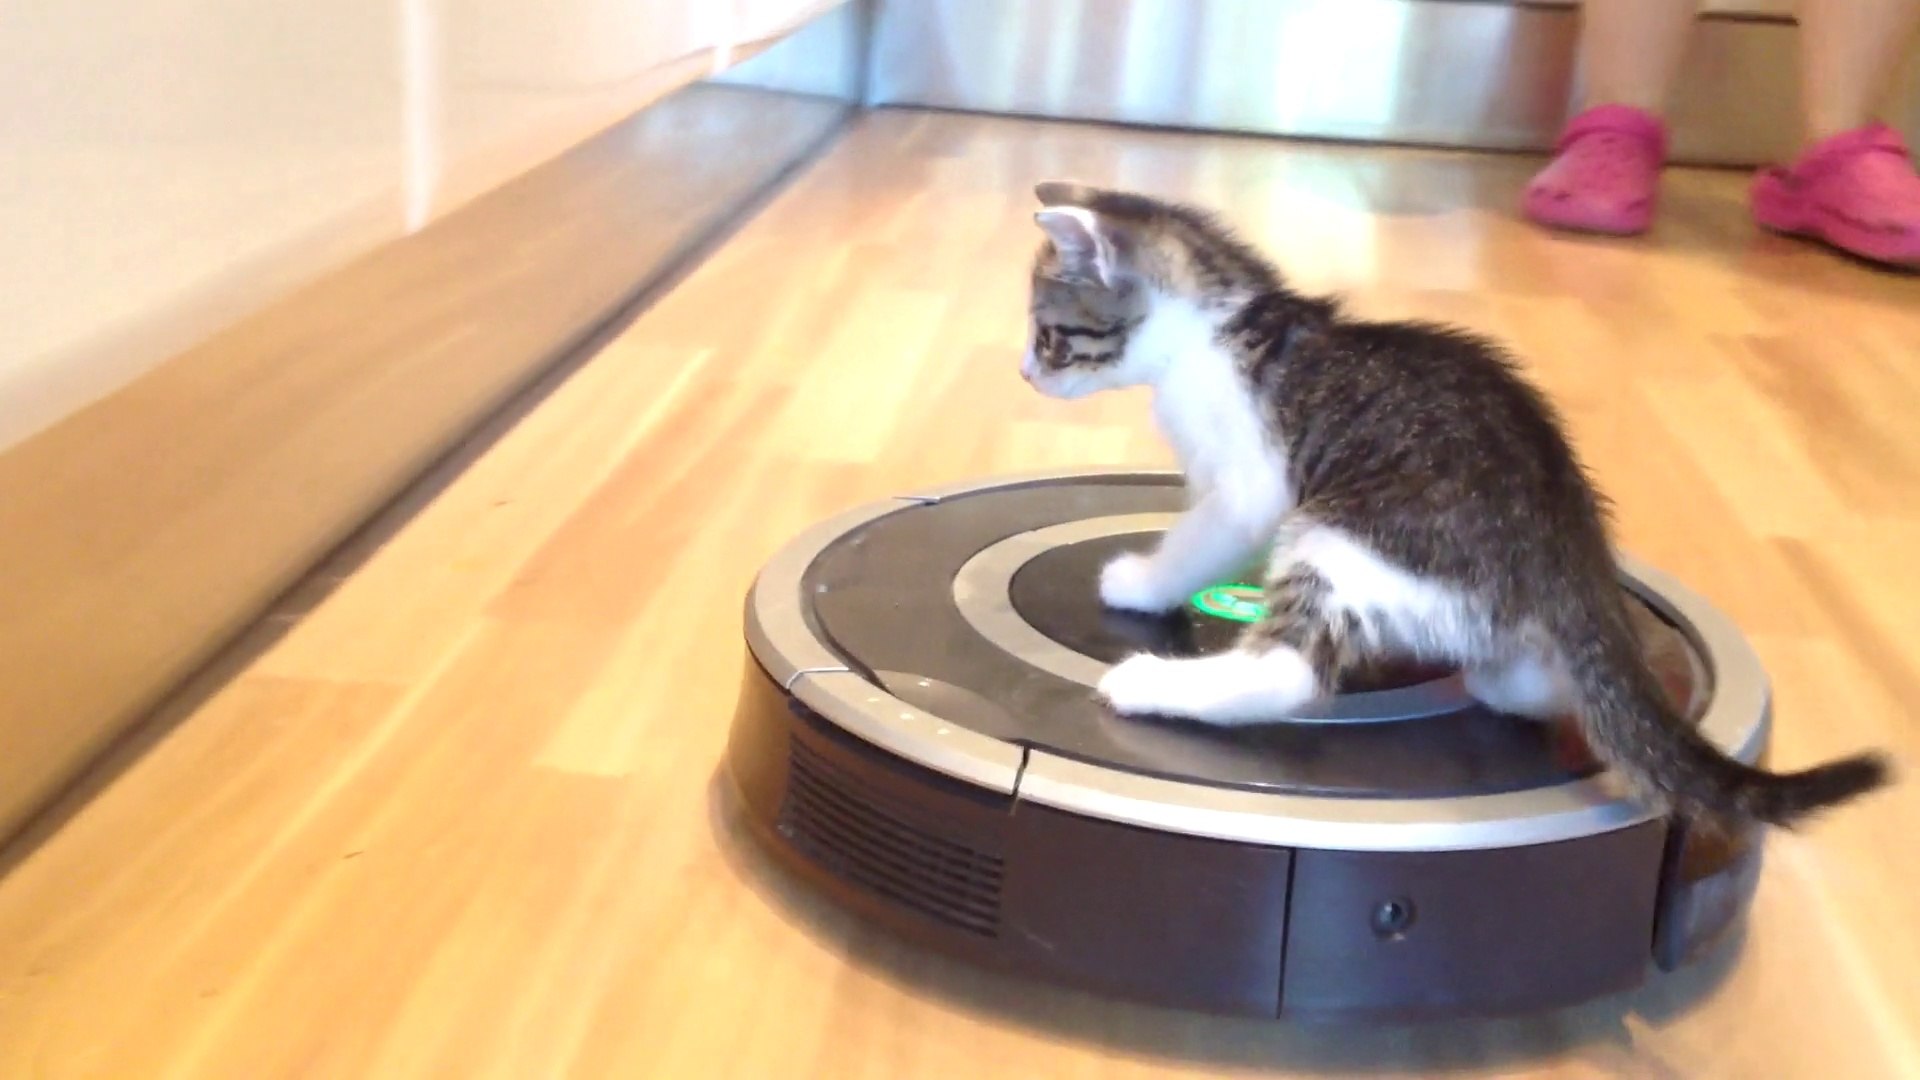 Kittens riding iRobot Roomba - Vacuum Cleaning Robot. - video Dailymotion